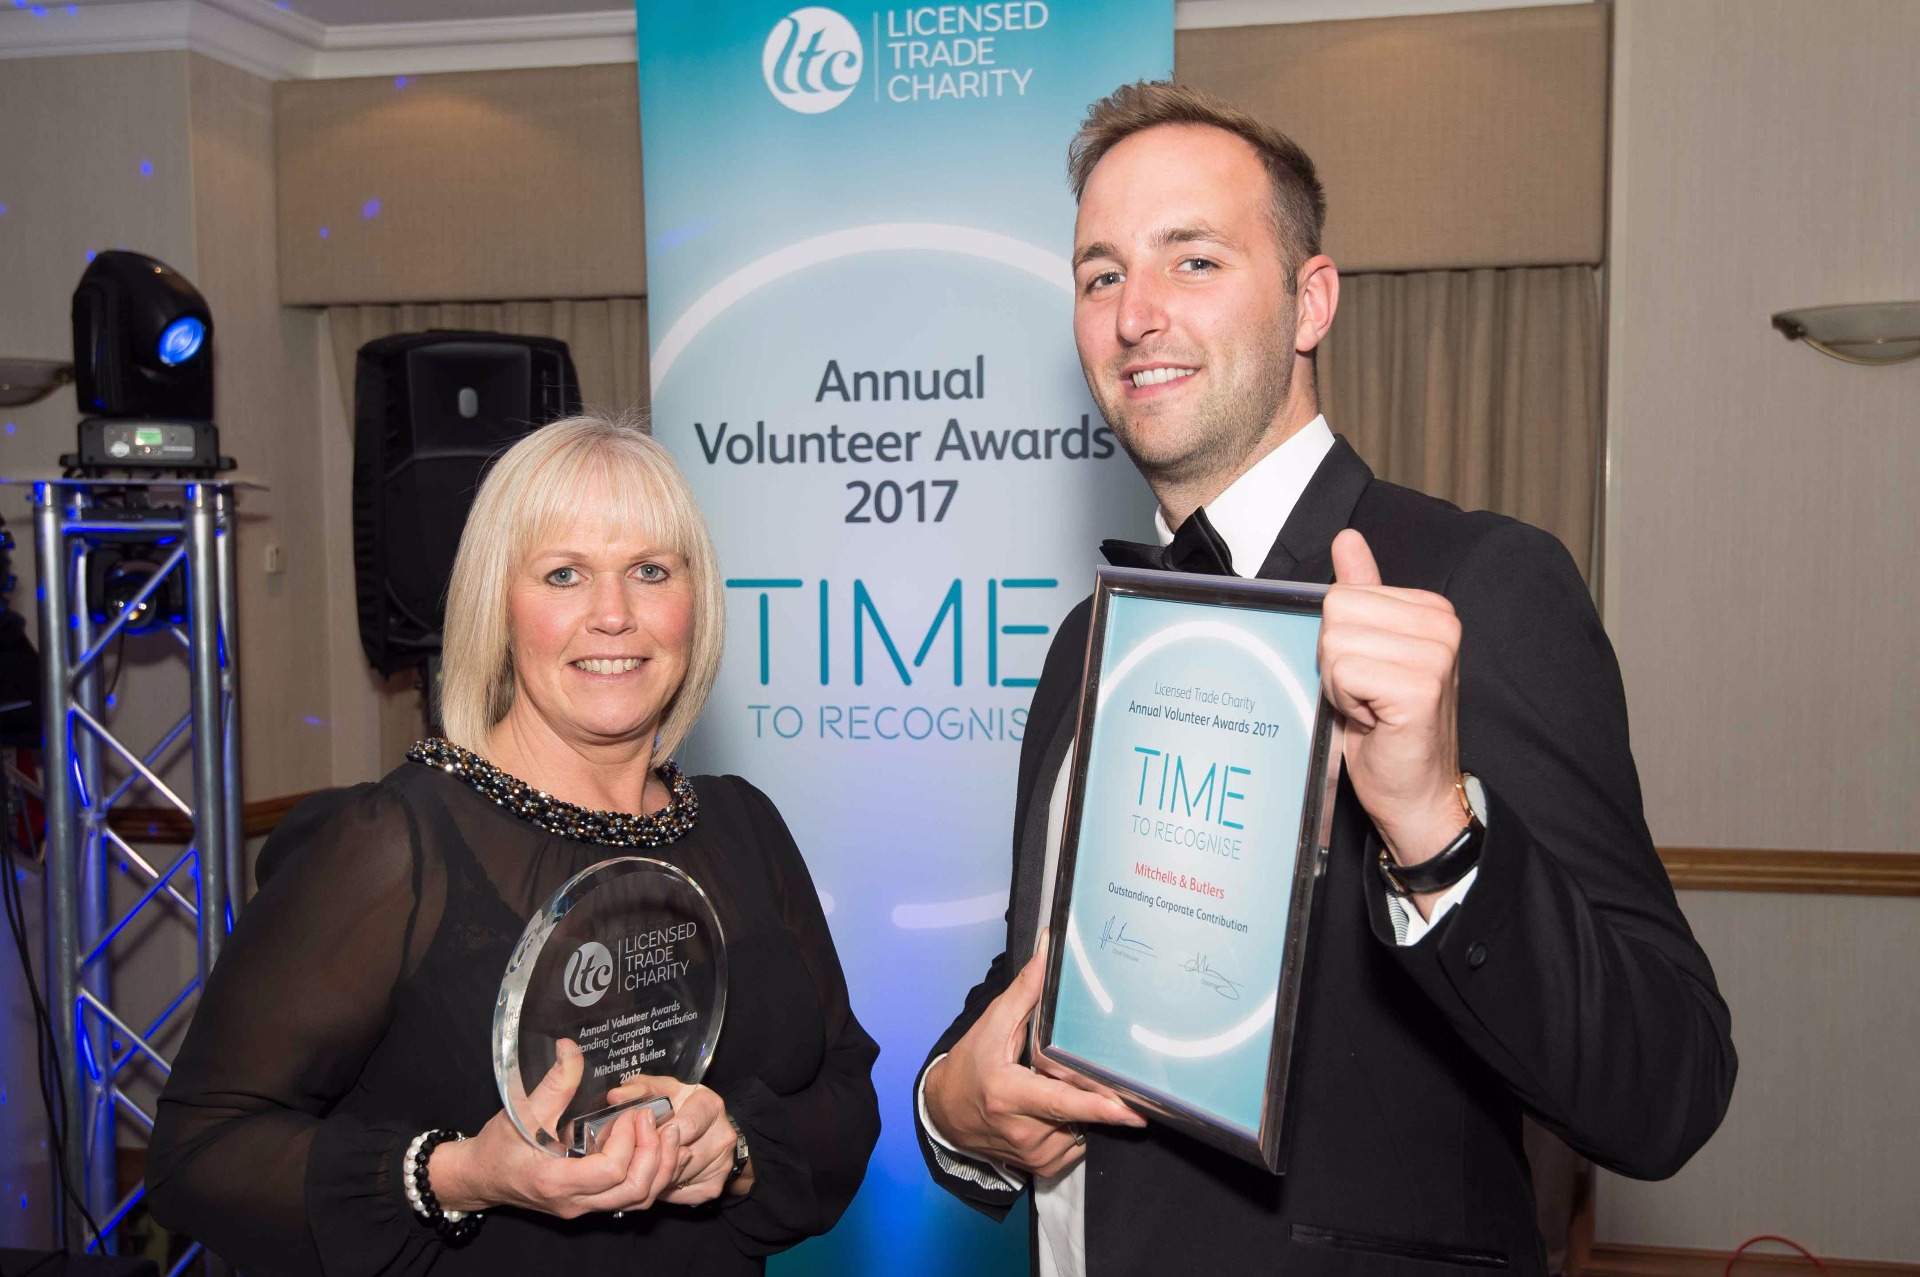 2017 Volunteer award winners with certificates